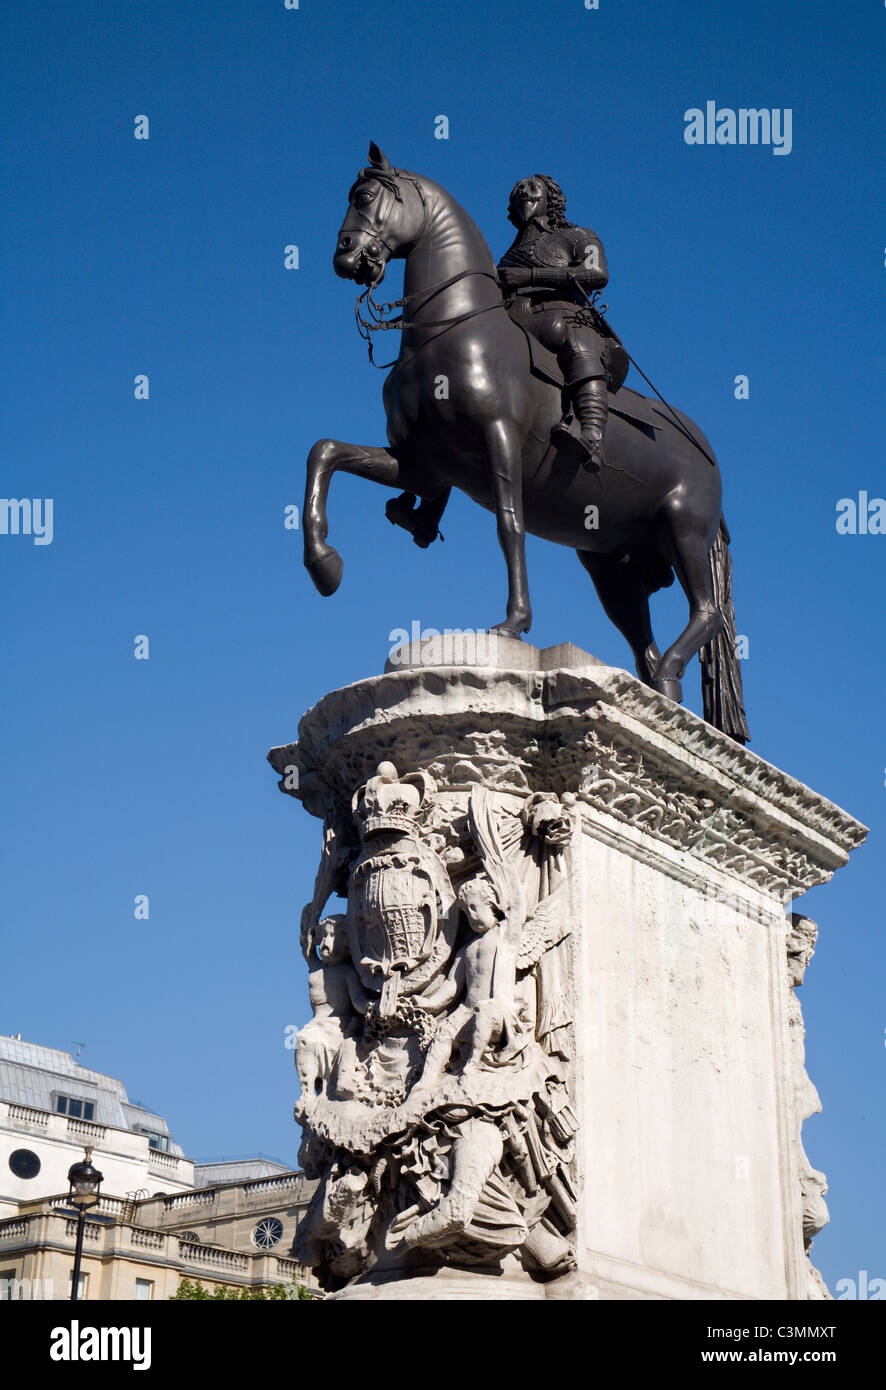 London - statue of king Charles I - Trafalgar square Stock Photo